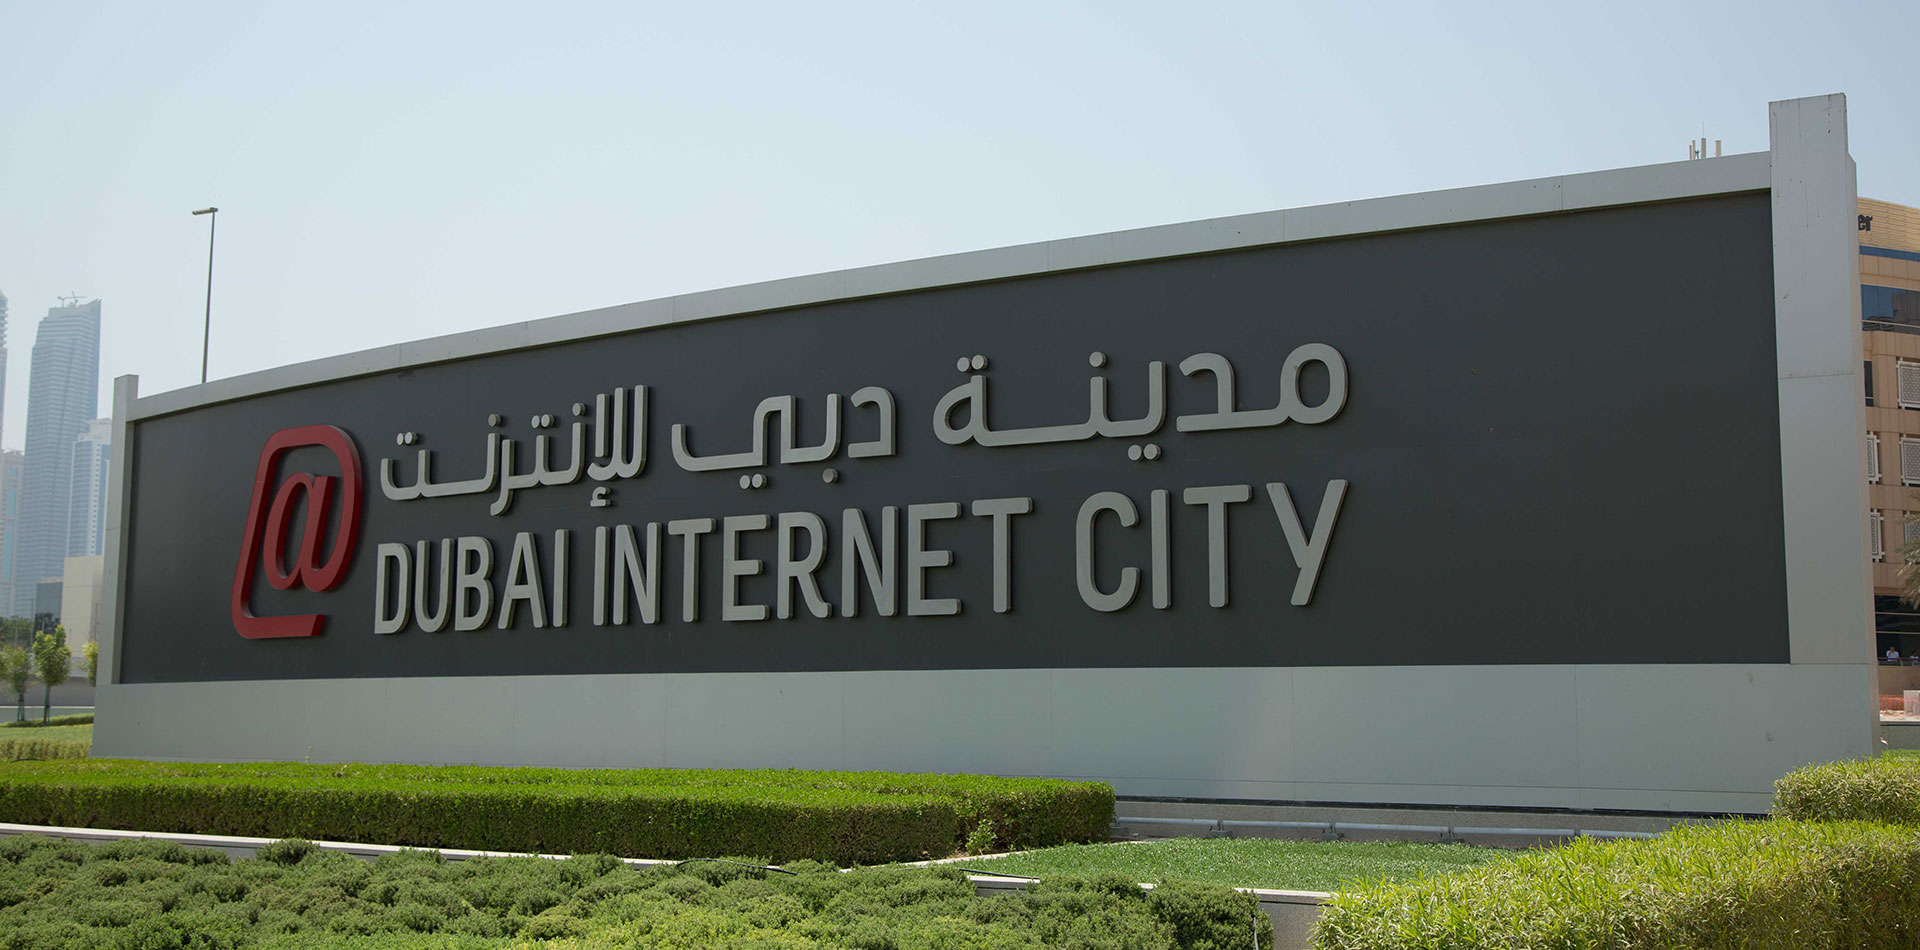 Monument Signage at Dubai Internet City